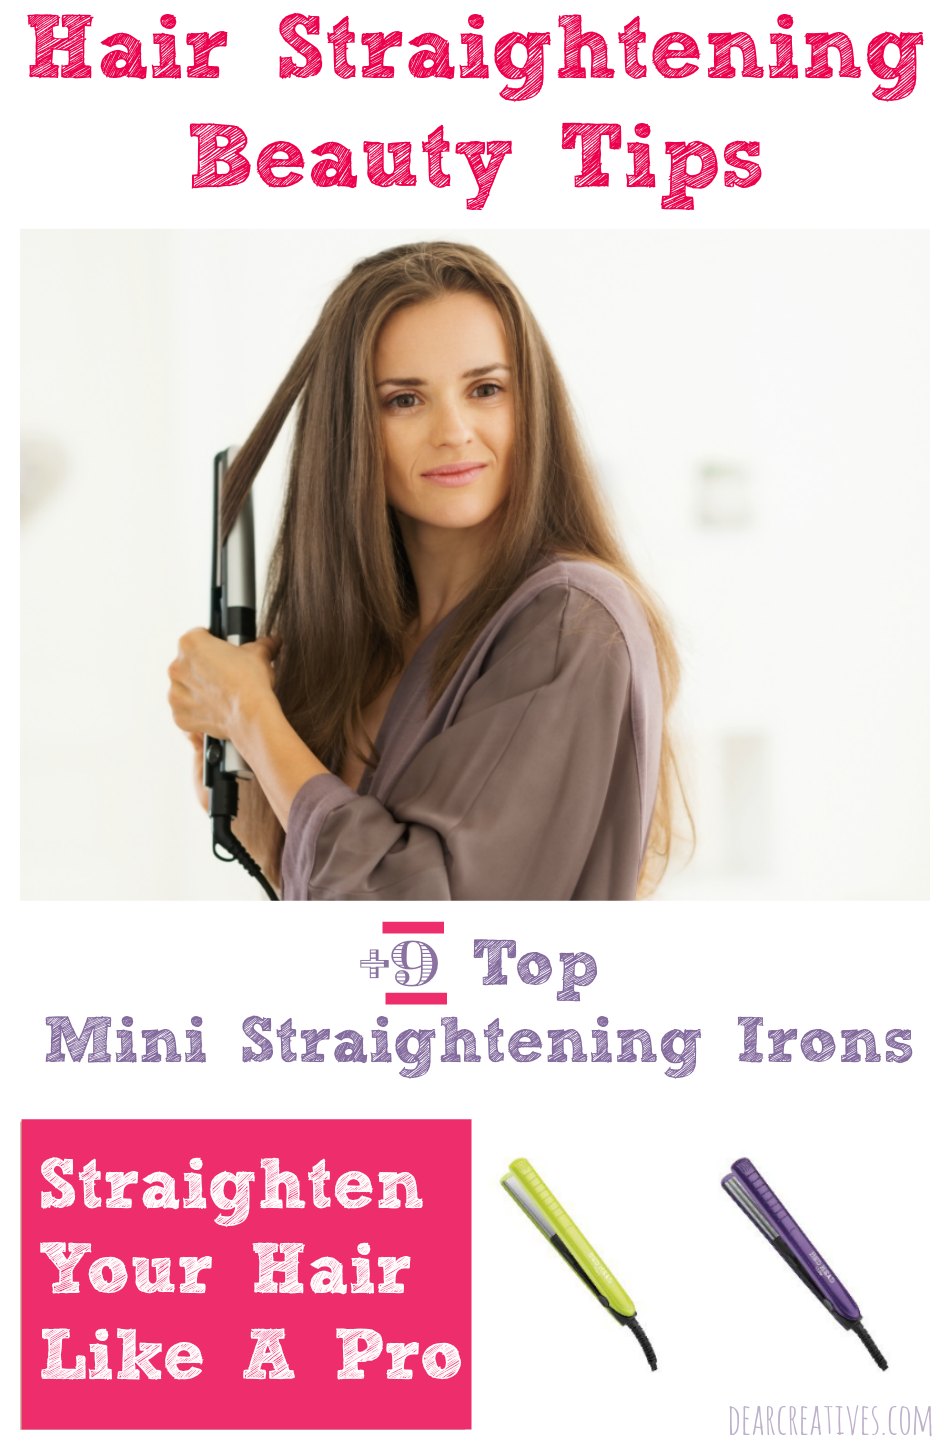 Beauty Tips: Hair Straightening Tips & Tools-Straighten Like A Pro